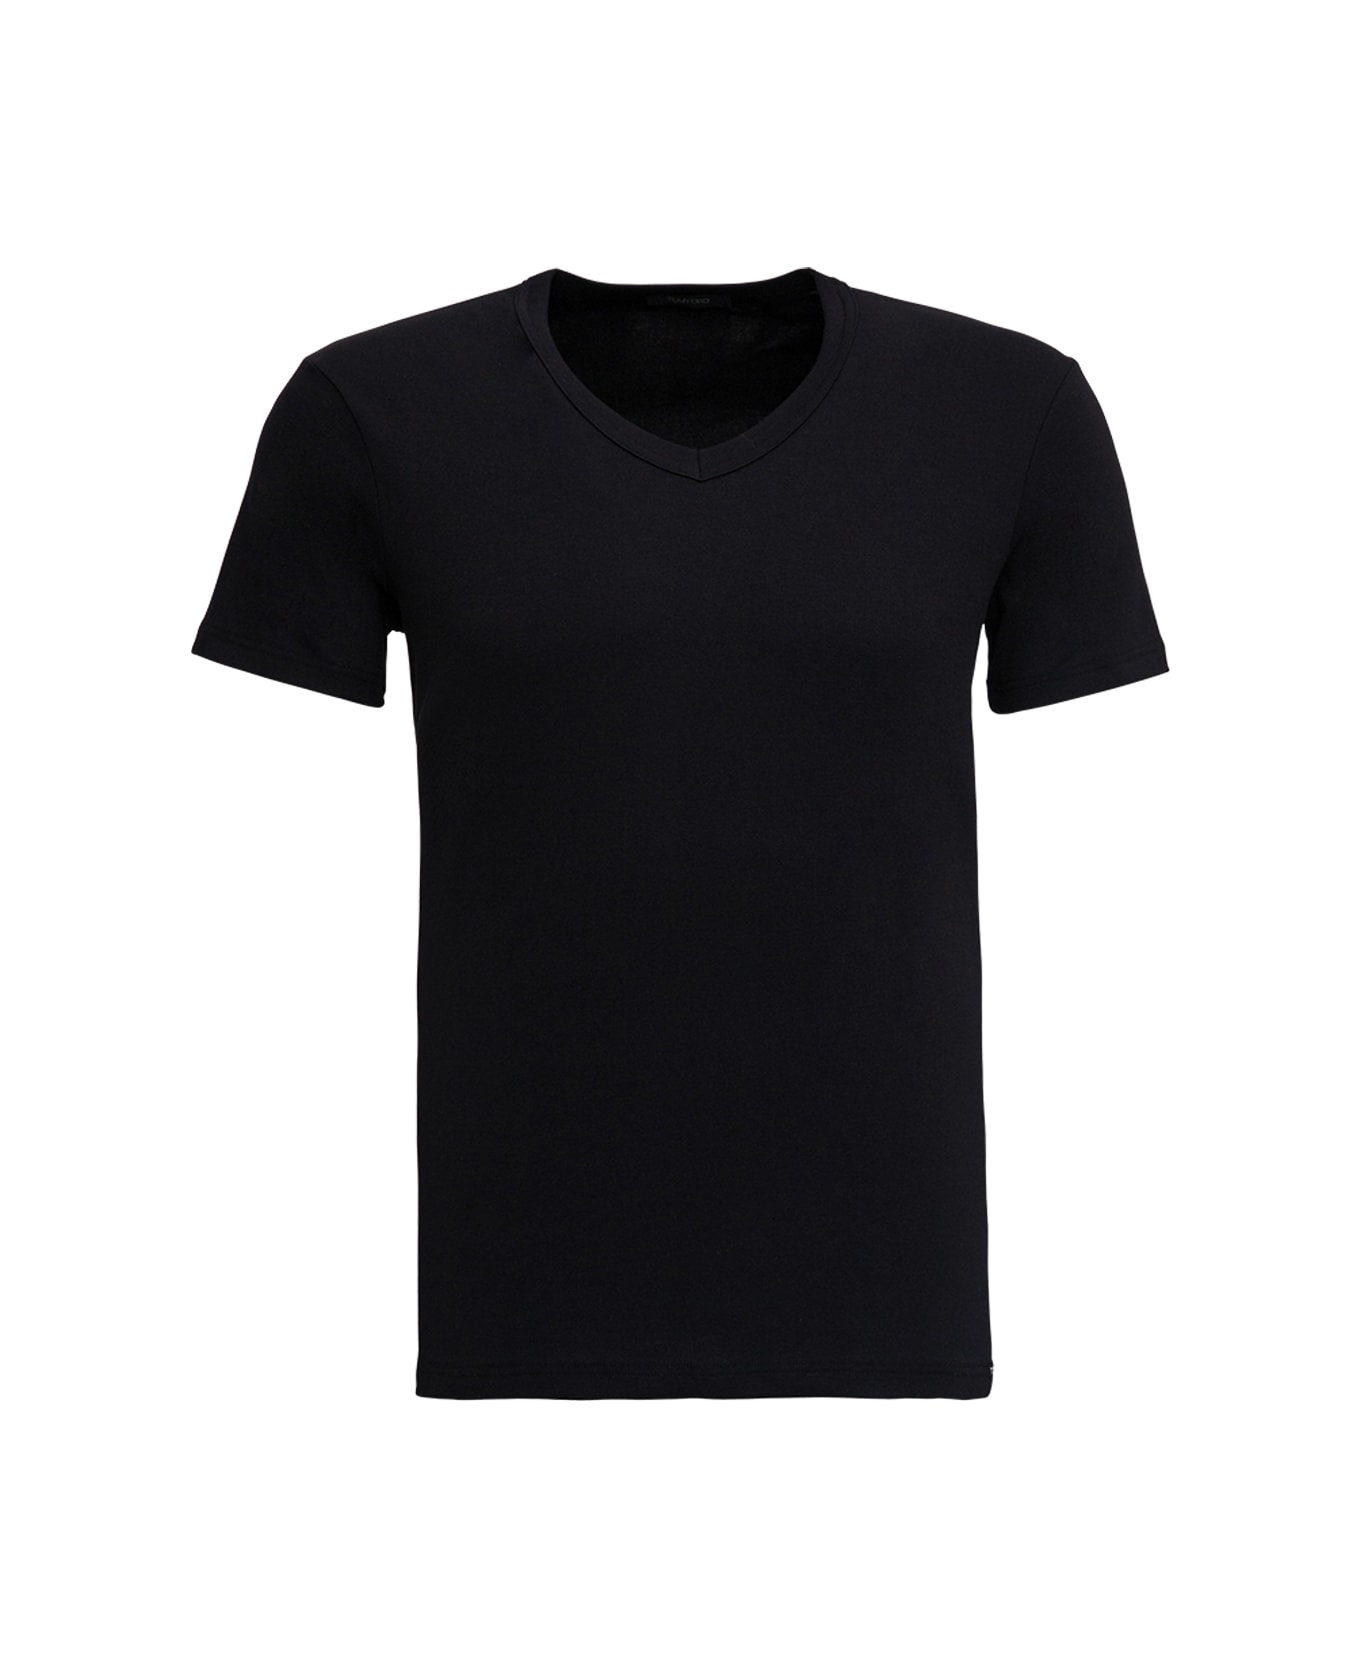 Tom Ford Black V-neck T-shirt Short Sleeves In Cotton Stretch Man - Black